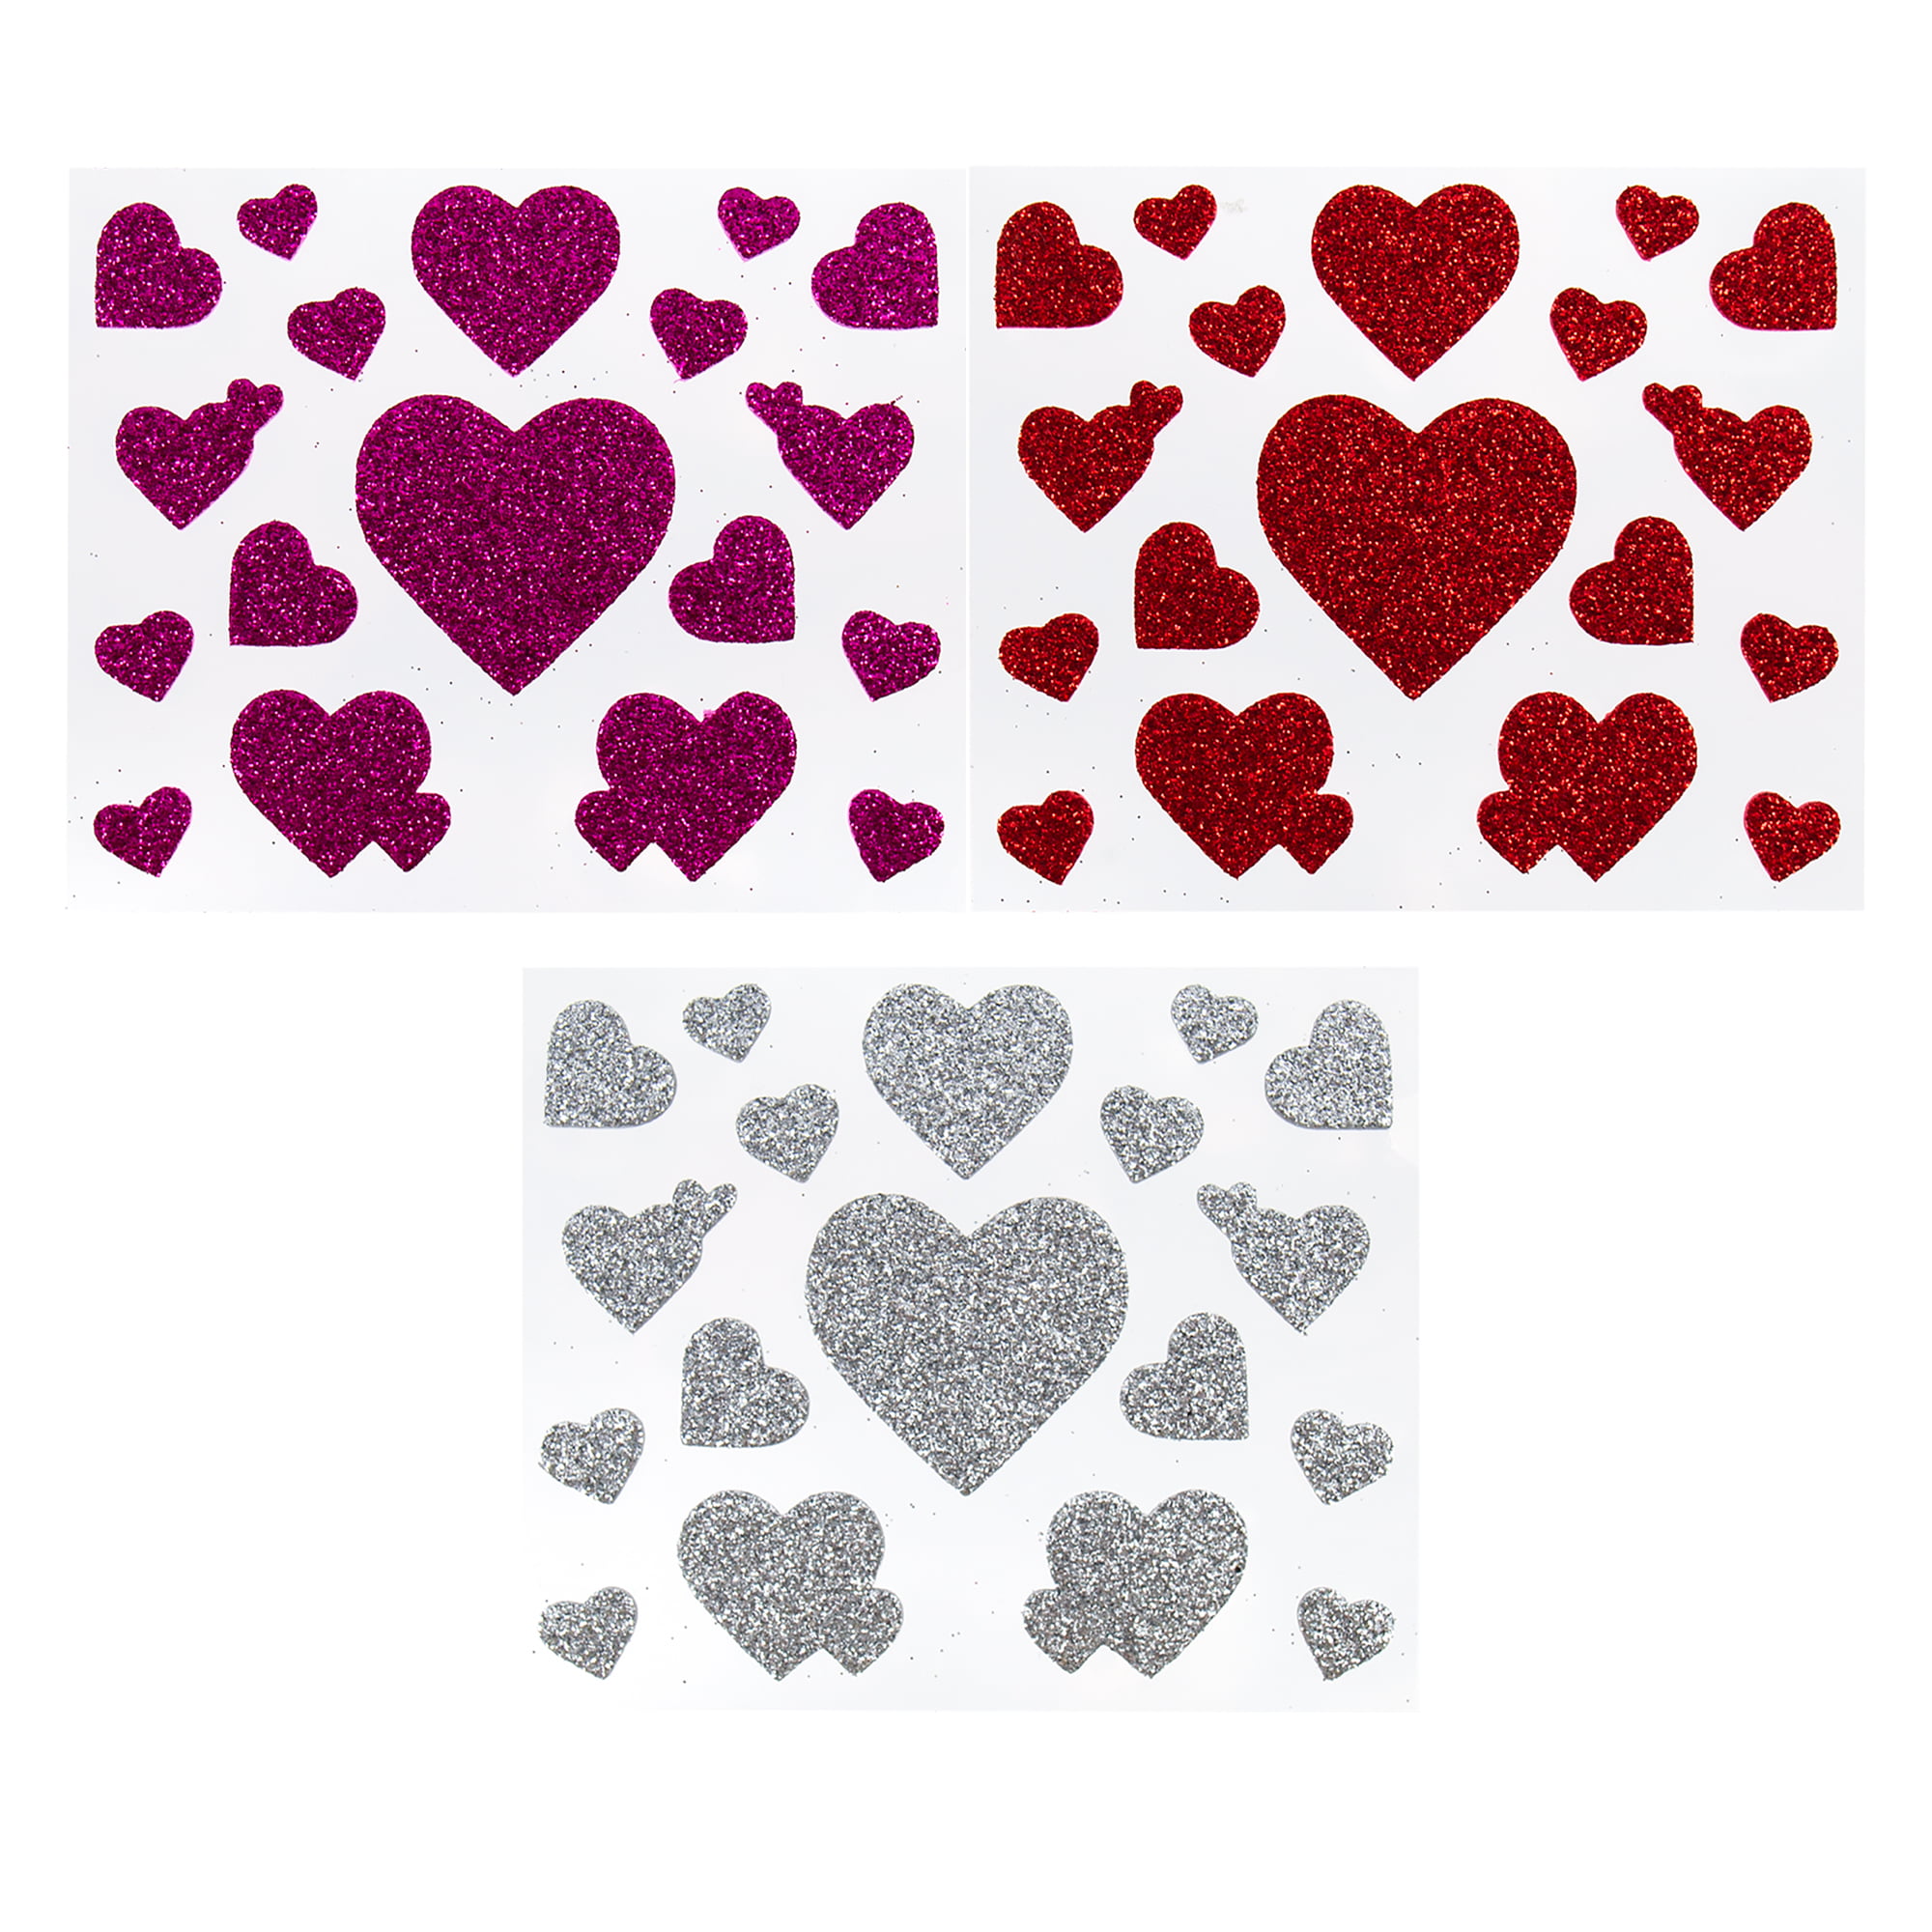  WINORDA 40 Sheets Glitter Heart Stickers Colorful